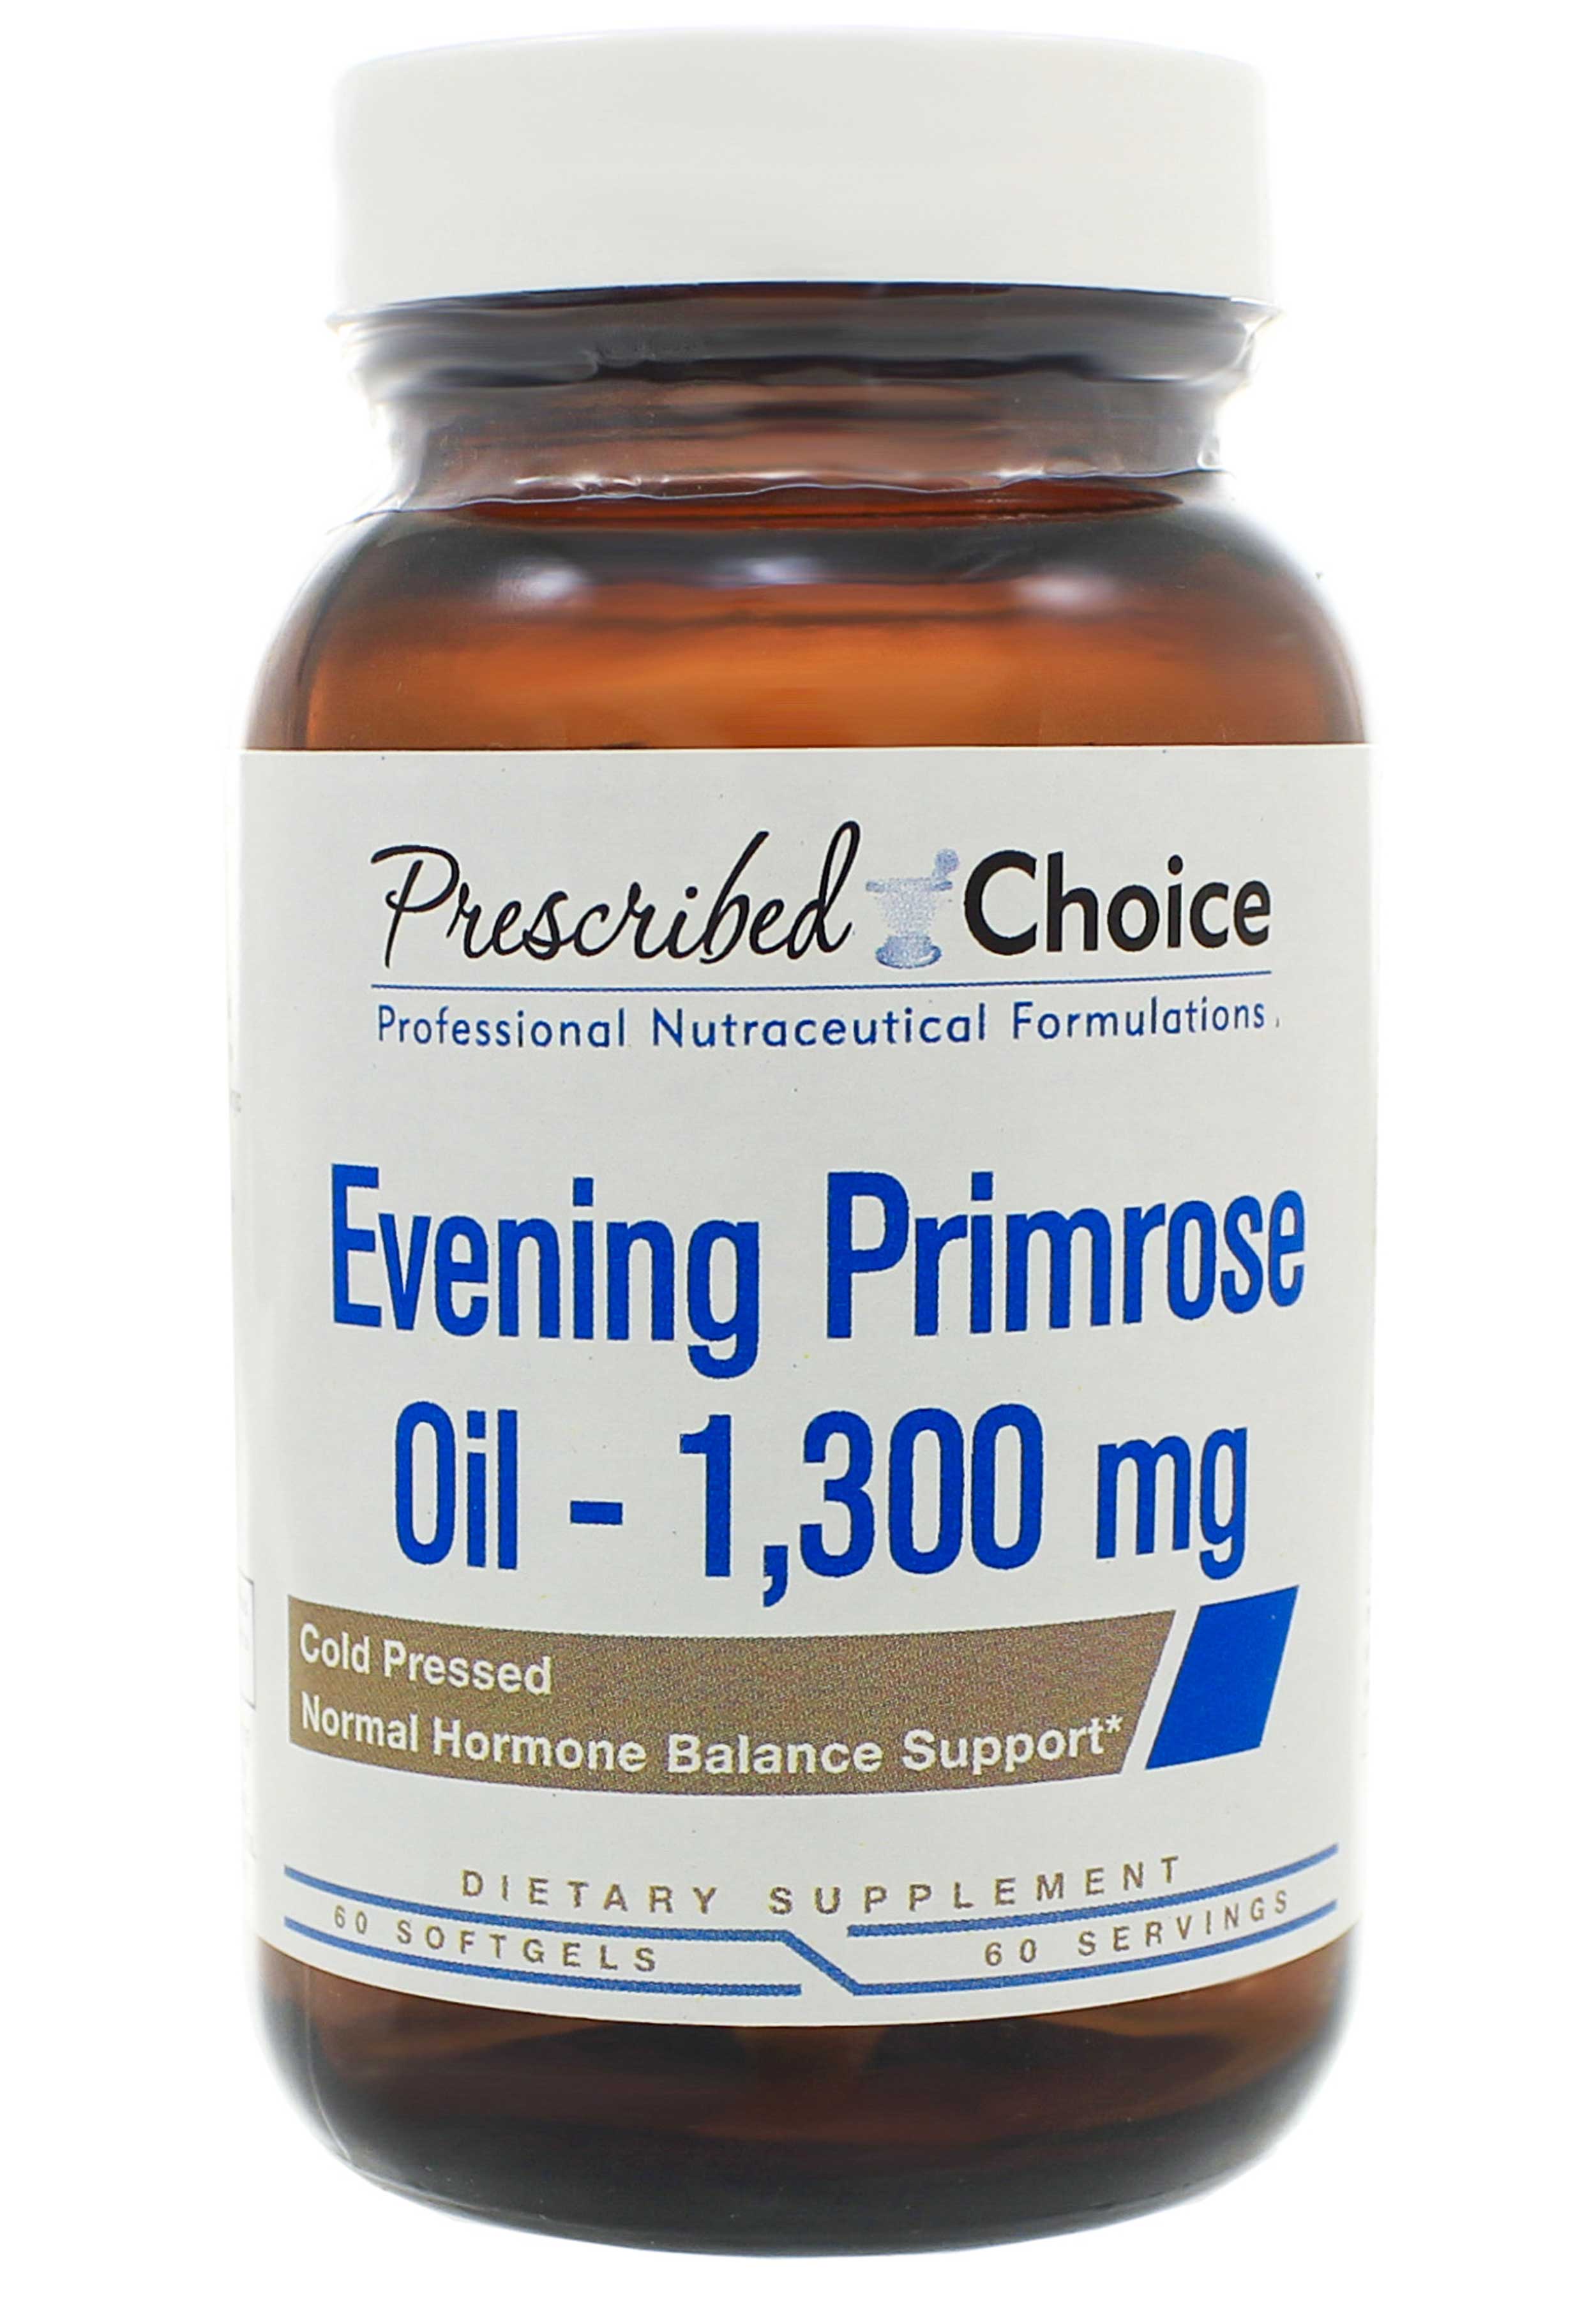 Prescribed Choice Evening Primrose Oil 1300 mg